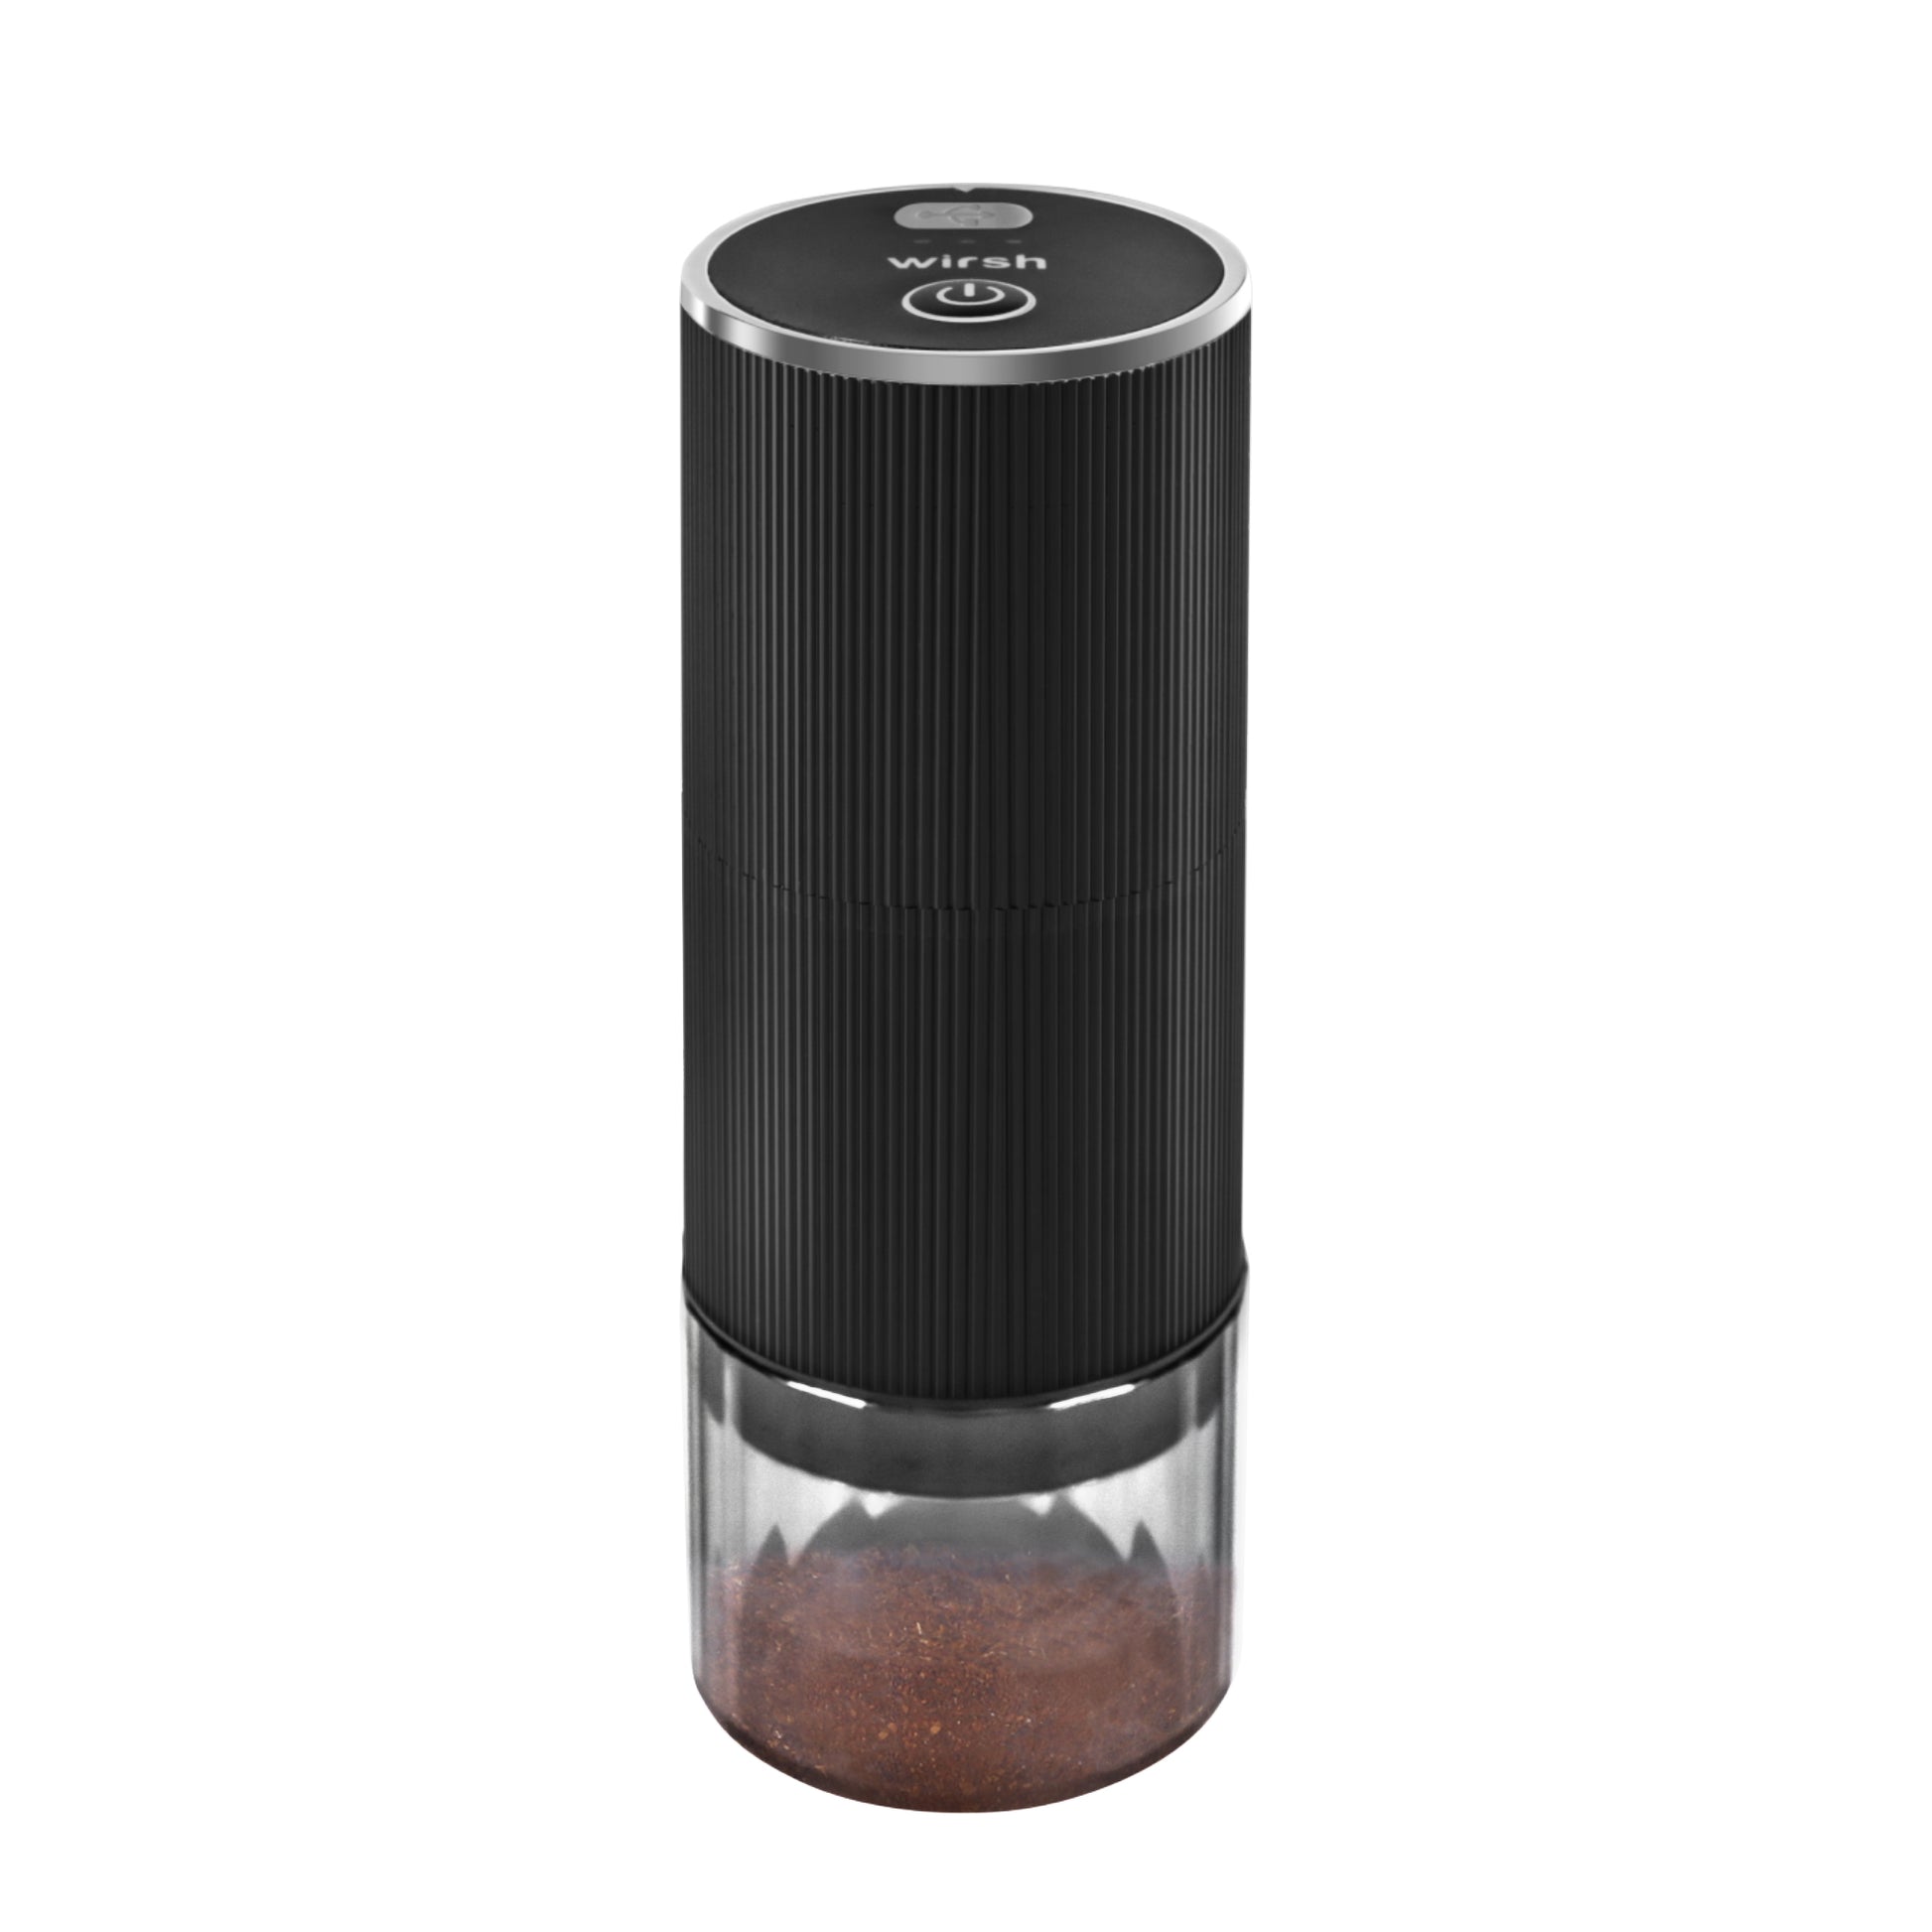 <img src="coffee grinder.jpg" alt="wirsh handle eletric burr coffee grinder"/>